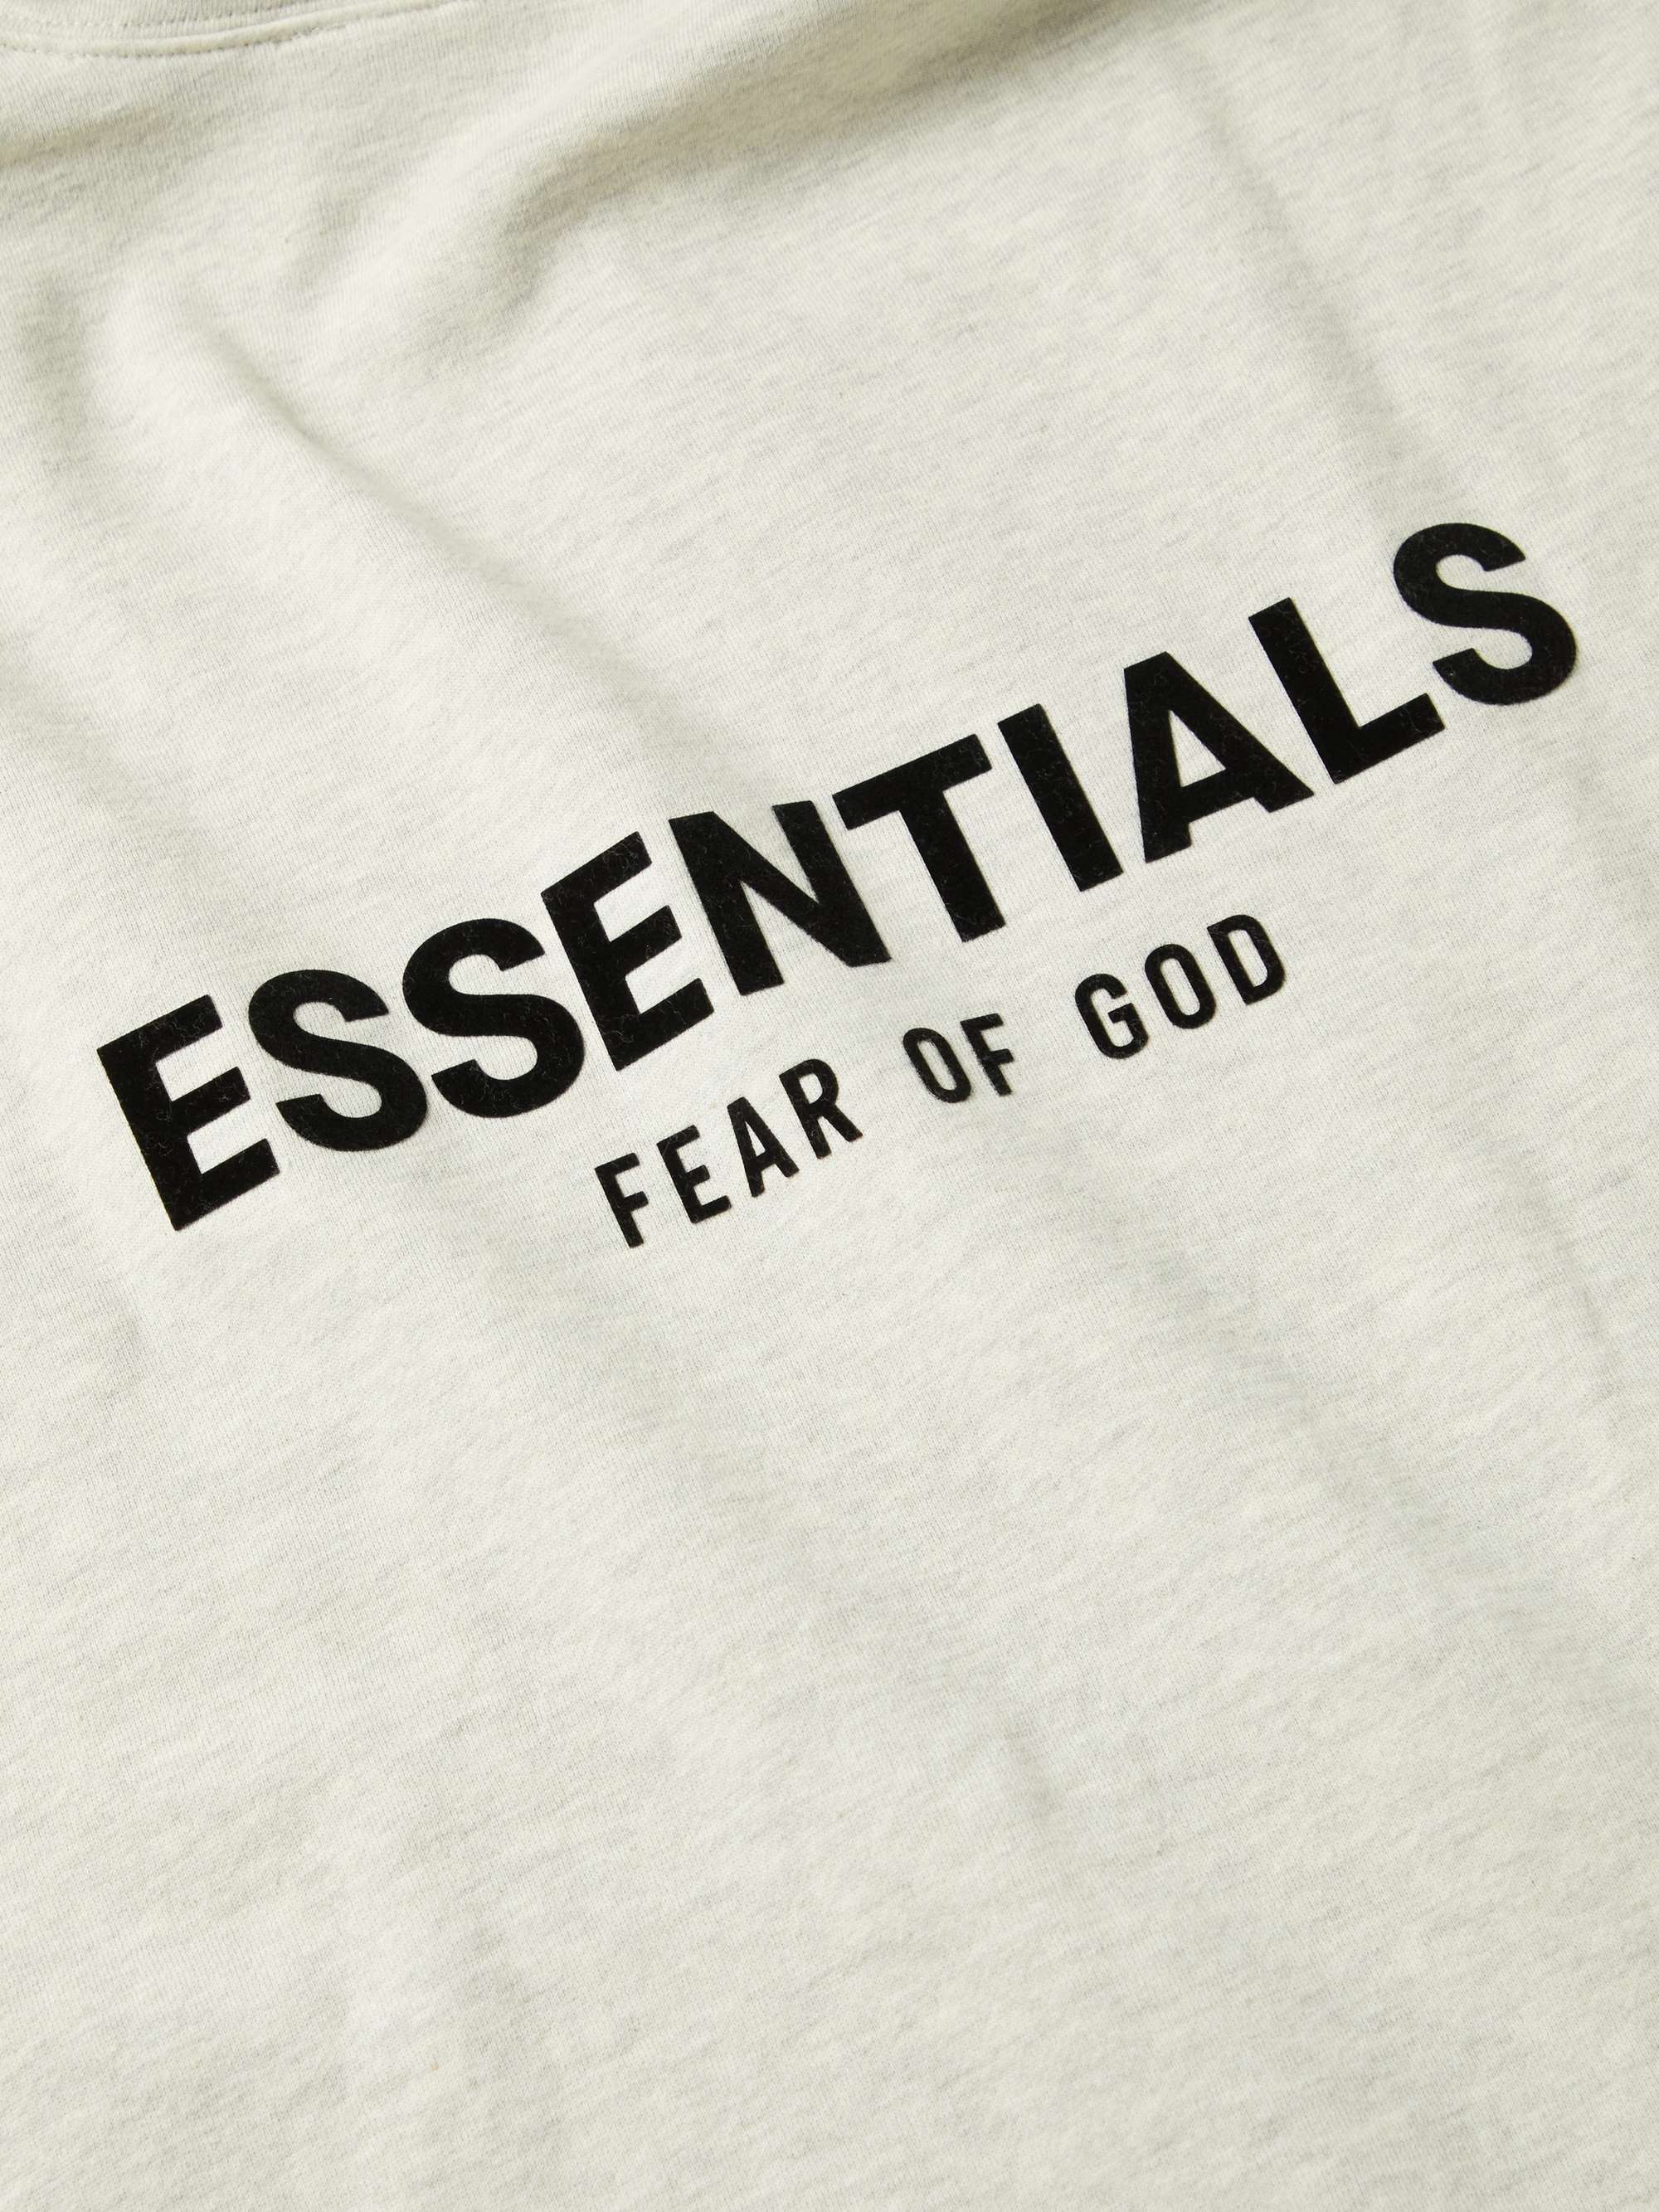 FEAR OF GOD ESSENTIALS Logo-Flocked Cotton-Blend Jersey Hoodie